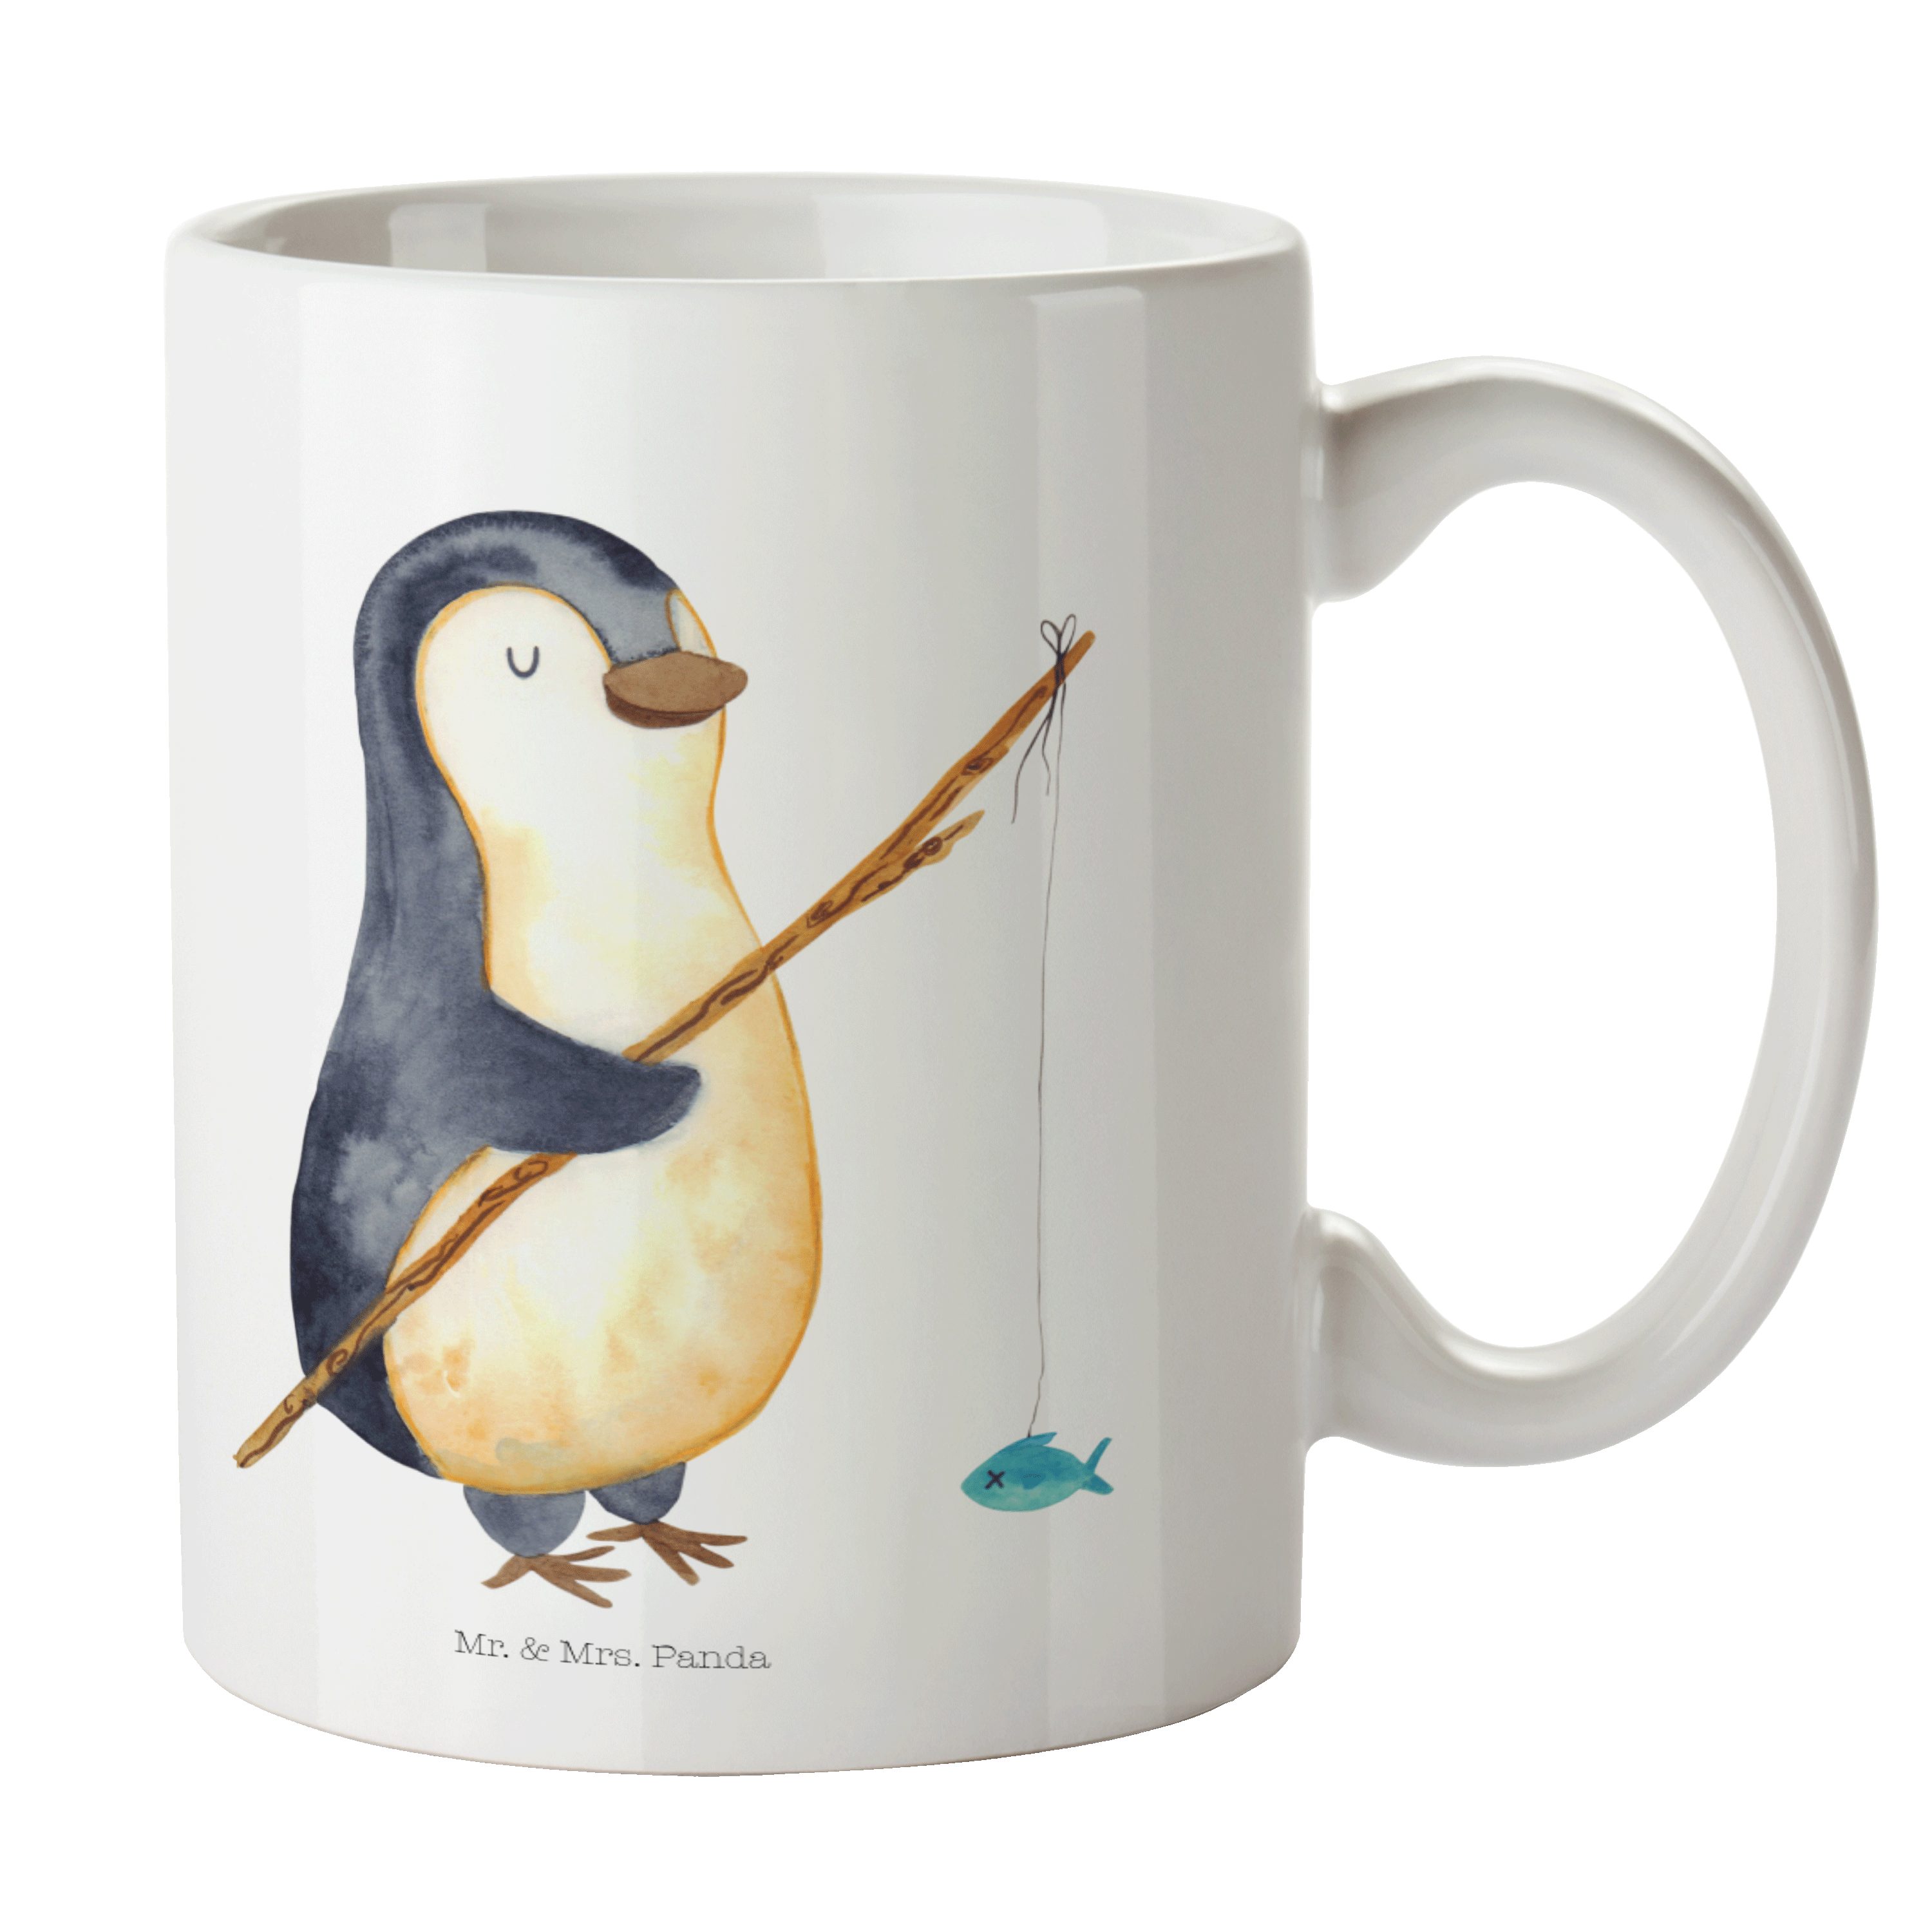 Mr. & Mrs. Panda Tasse Pinguin Angler - Weiß - Geschenk, Keramiktasse, Kaffeebecher, Seevoge, Keramik